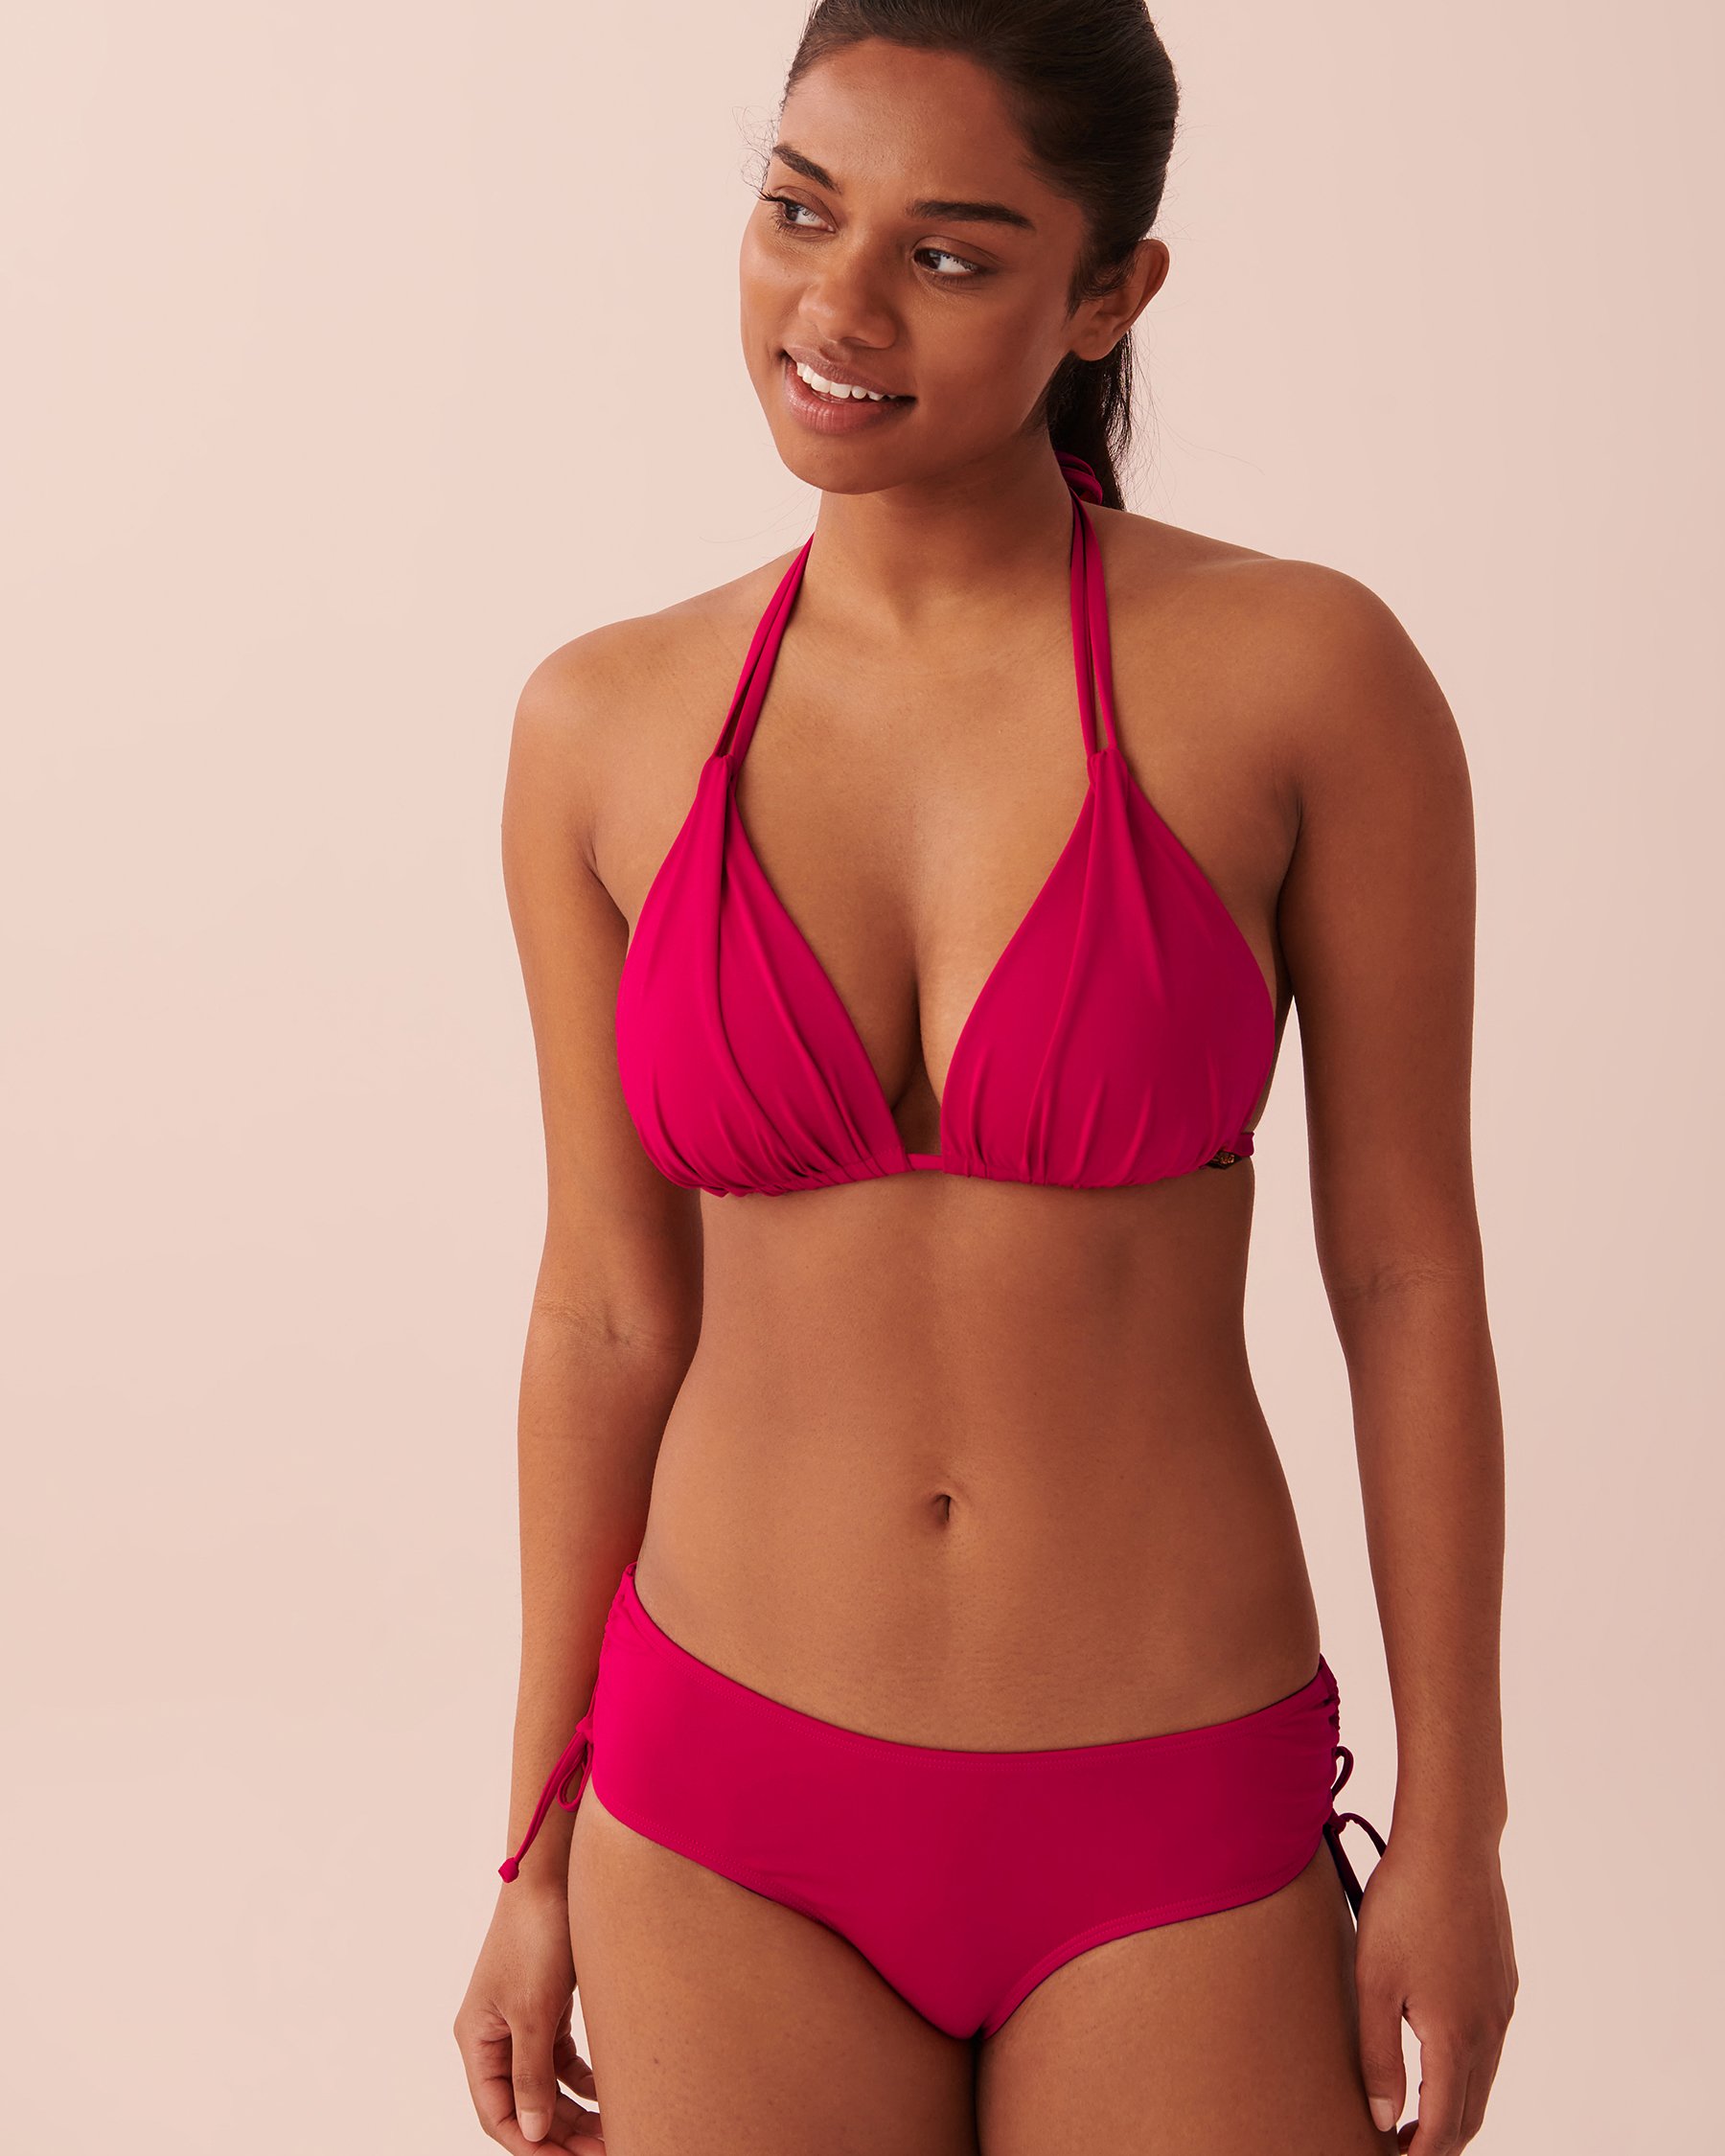 LA VIE EN ROSE AQUA BRIGHT ROSE Recycled Fibers Brazilian Bikini Bottom Bright pink 70300446 - View6